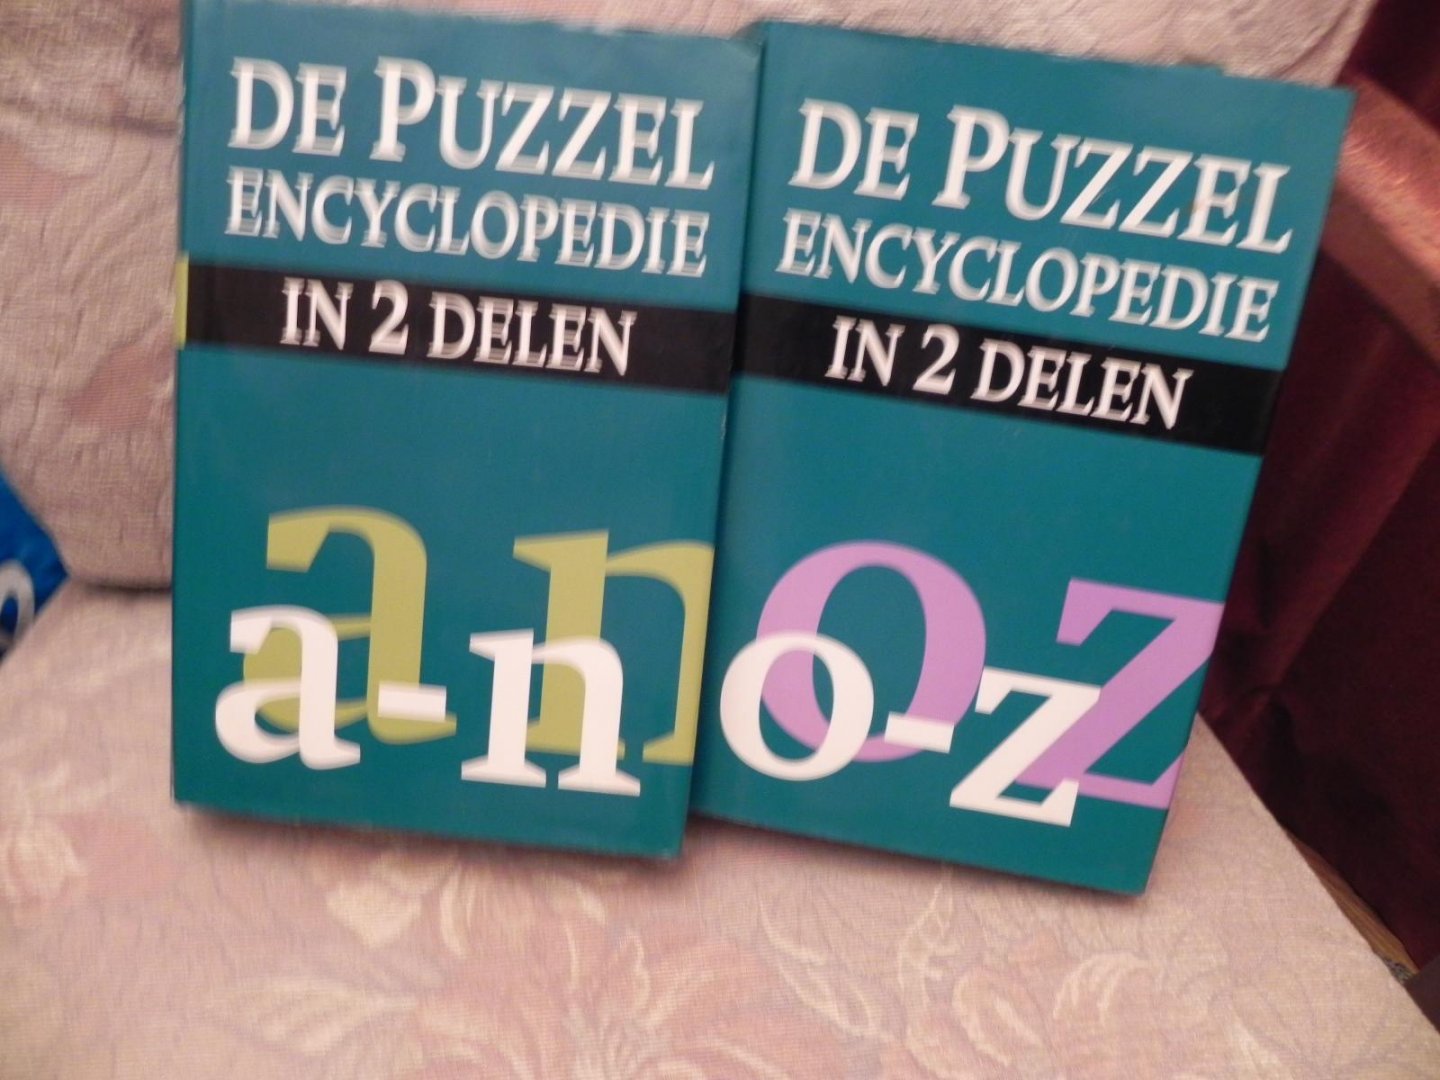  - De puzzel encyclopedie in 2 delen